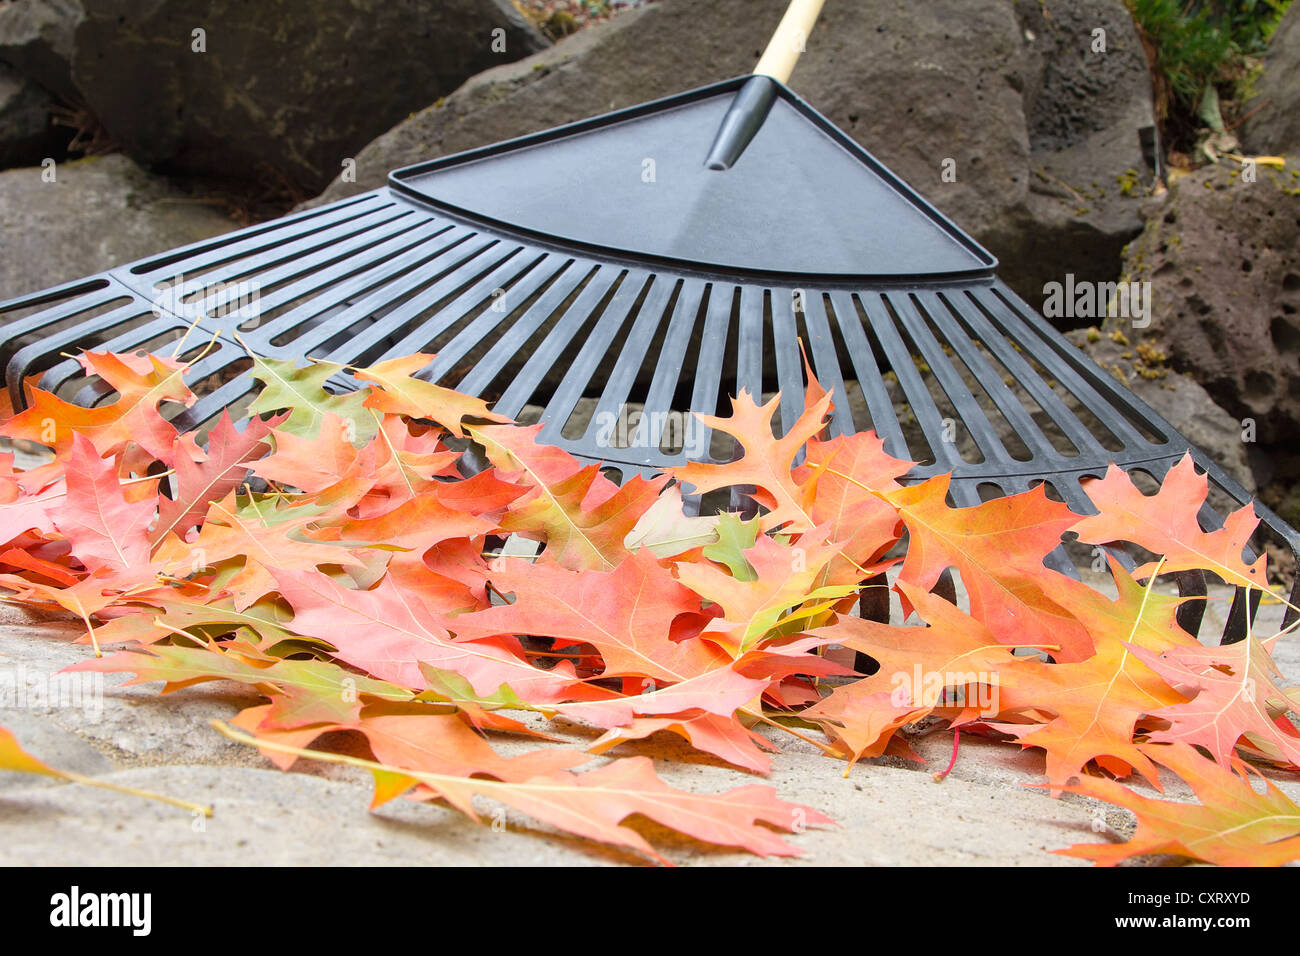 Raking Fallen Oak Tree Leaves from Backyard Stone Pavers Patio in Autumn Closeup Stock Photo